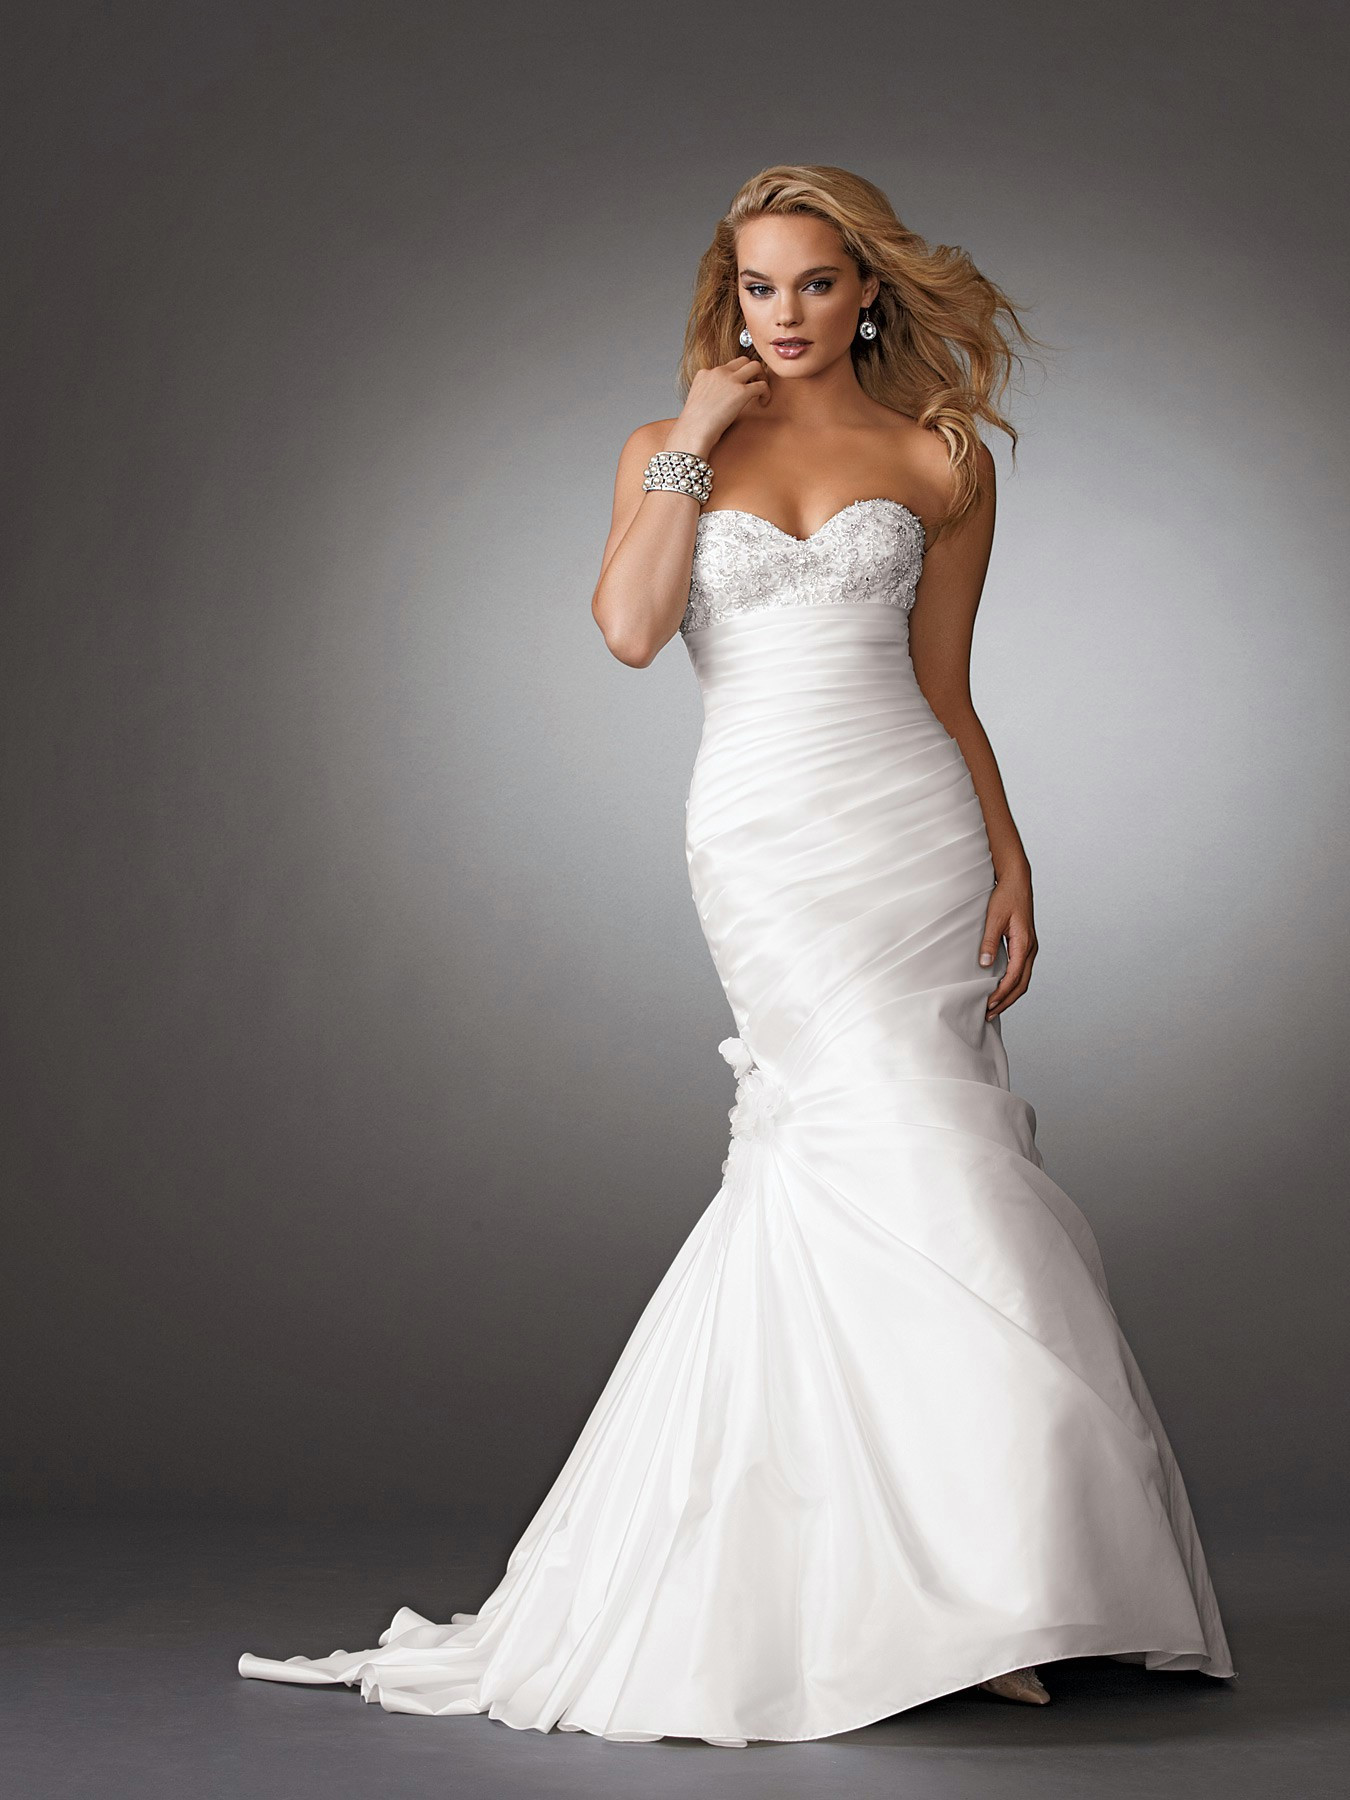 Mermaids Wedding Dresses
 Mermaid Wedding Dresses – An Elegant Choice For Brides